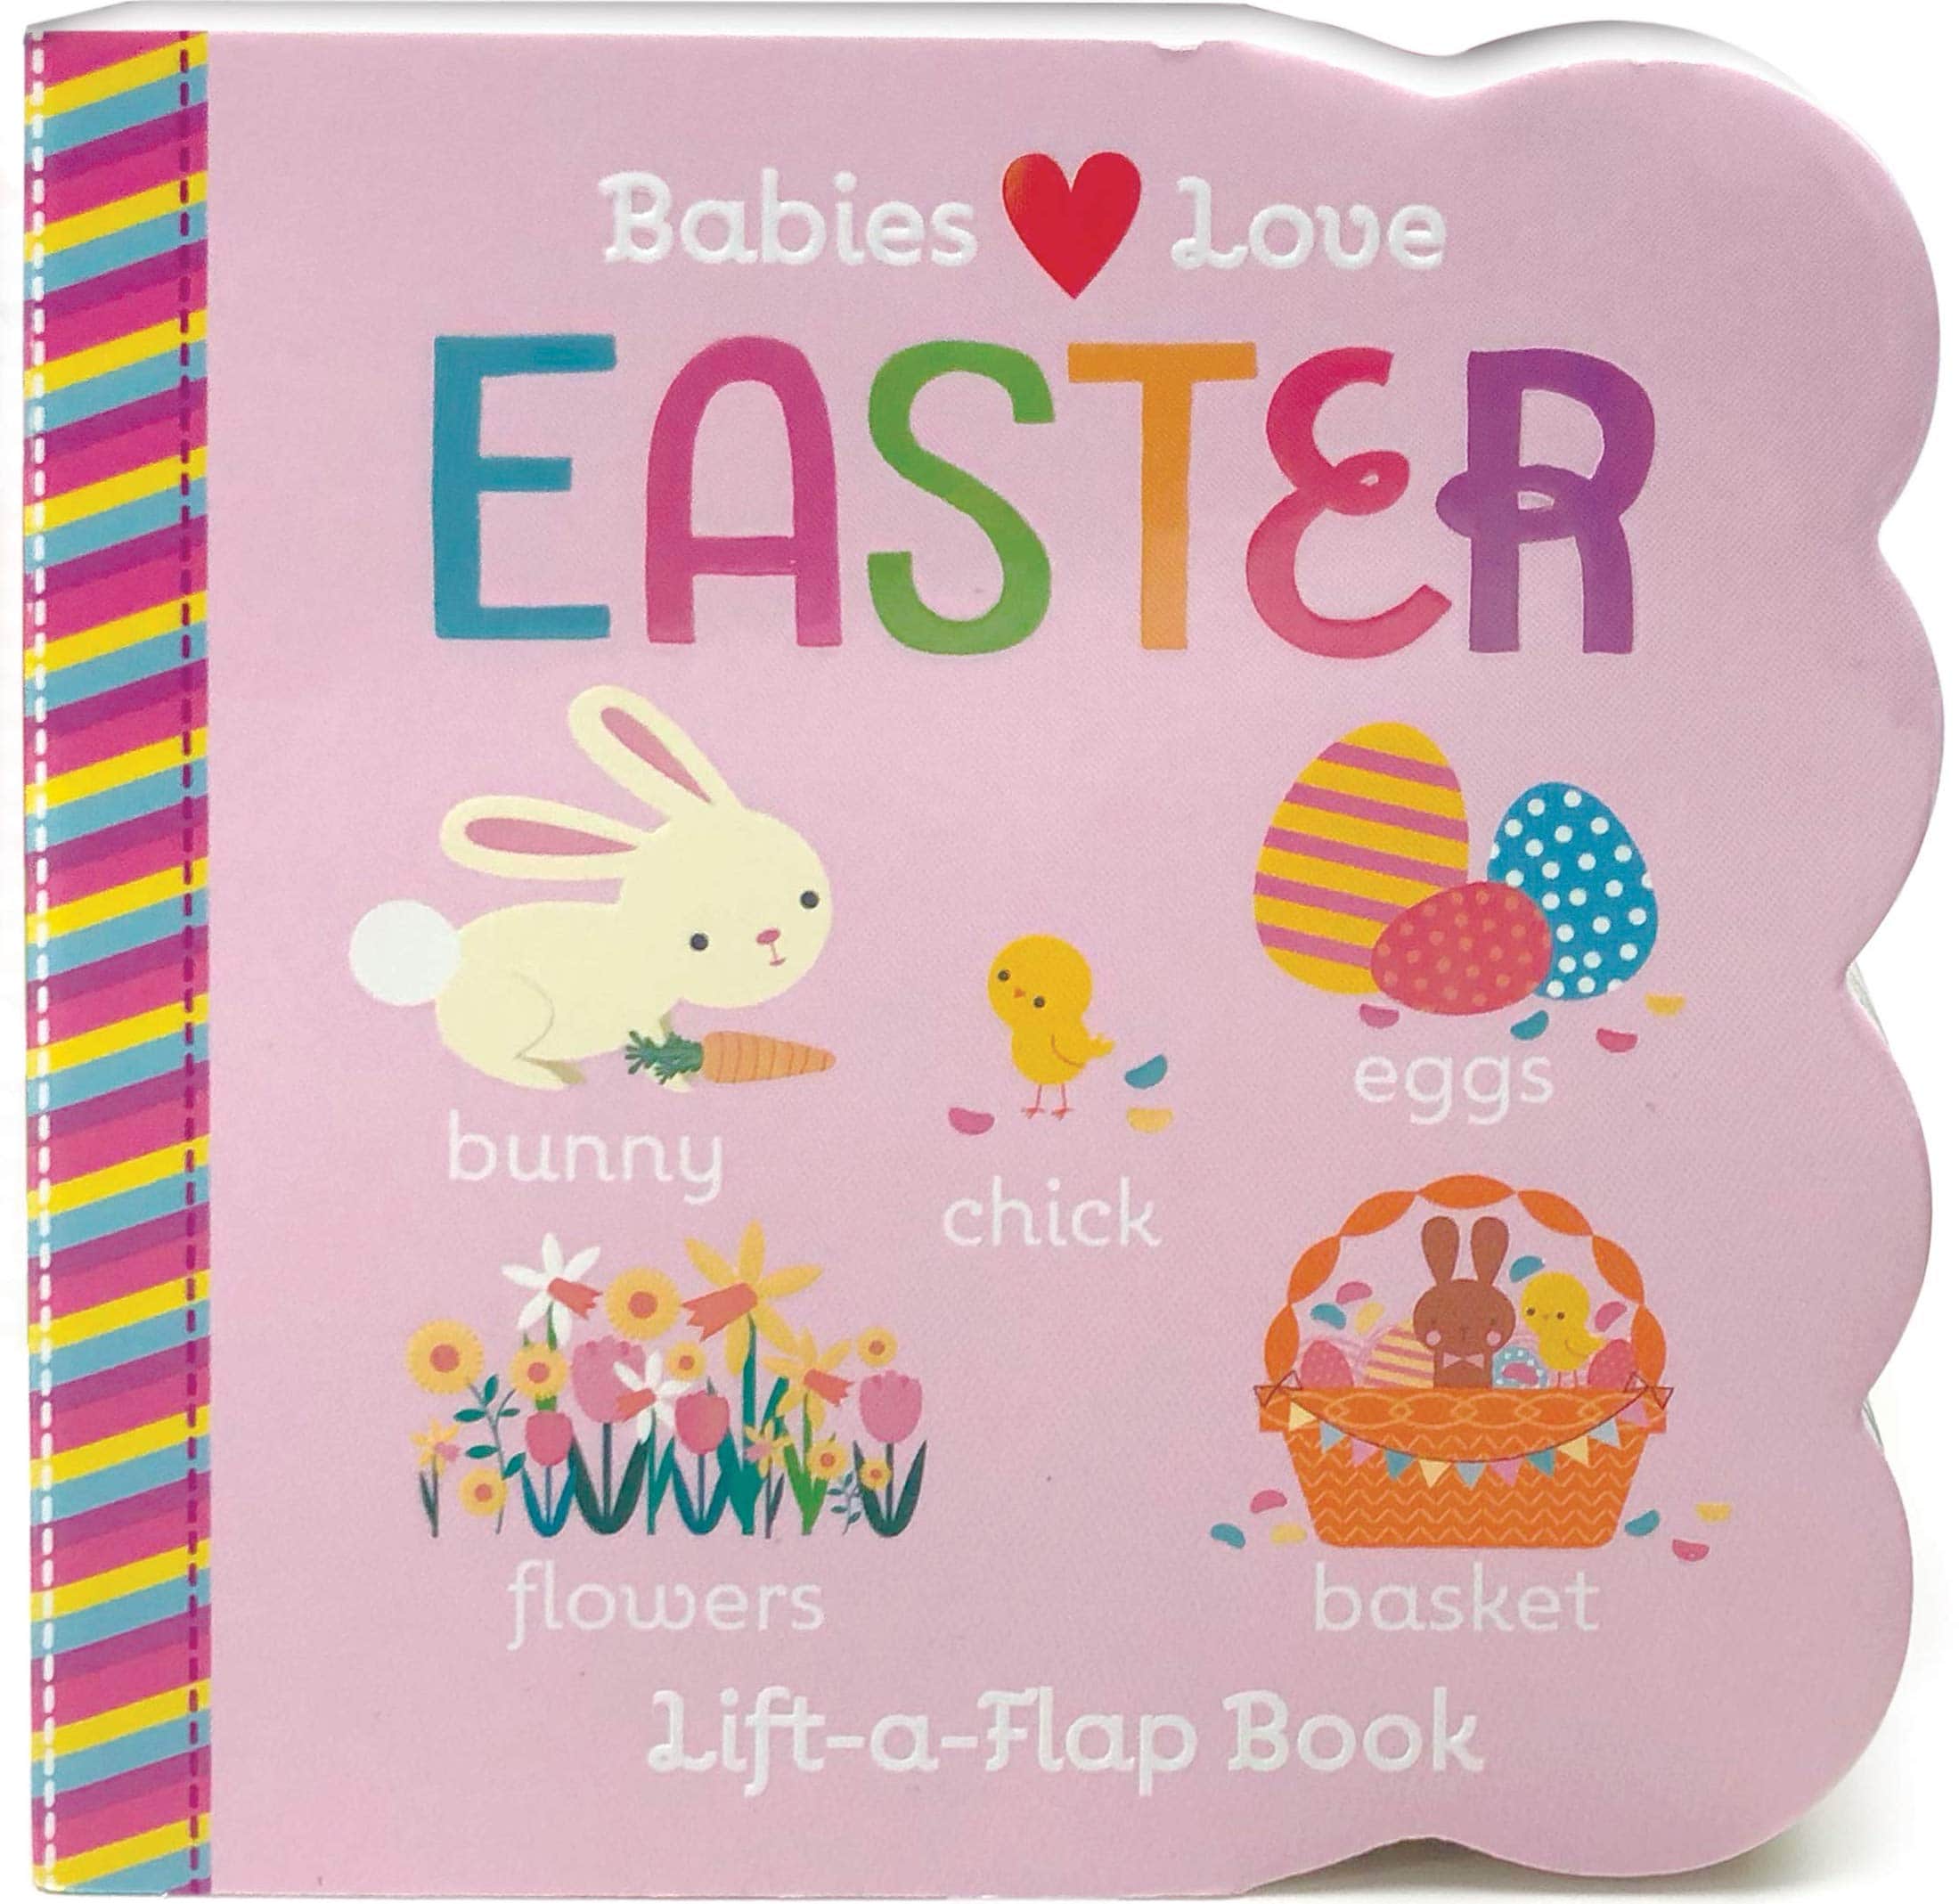 Babies Love Easter board book